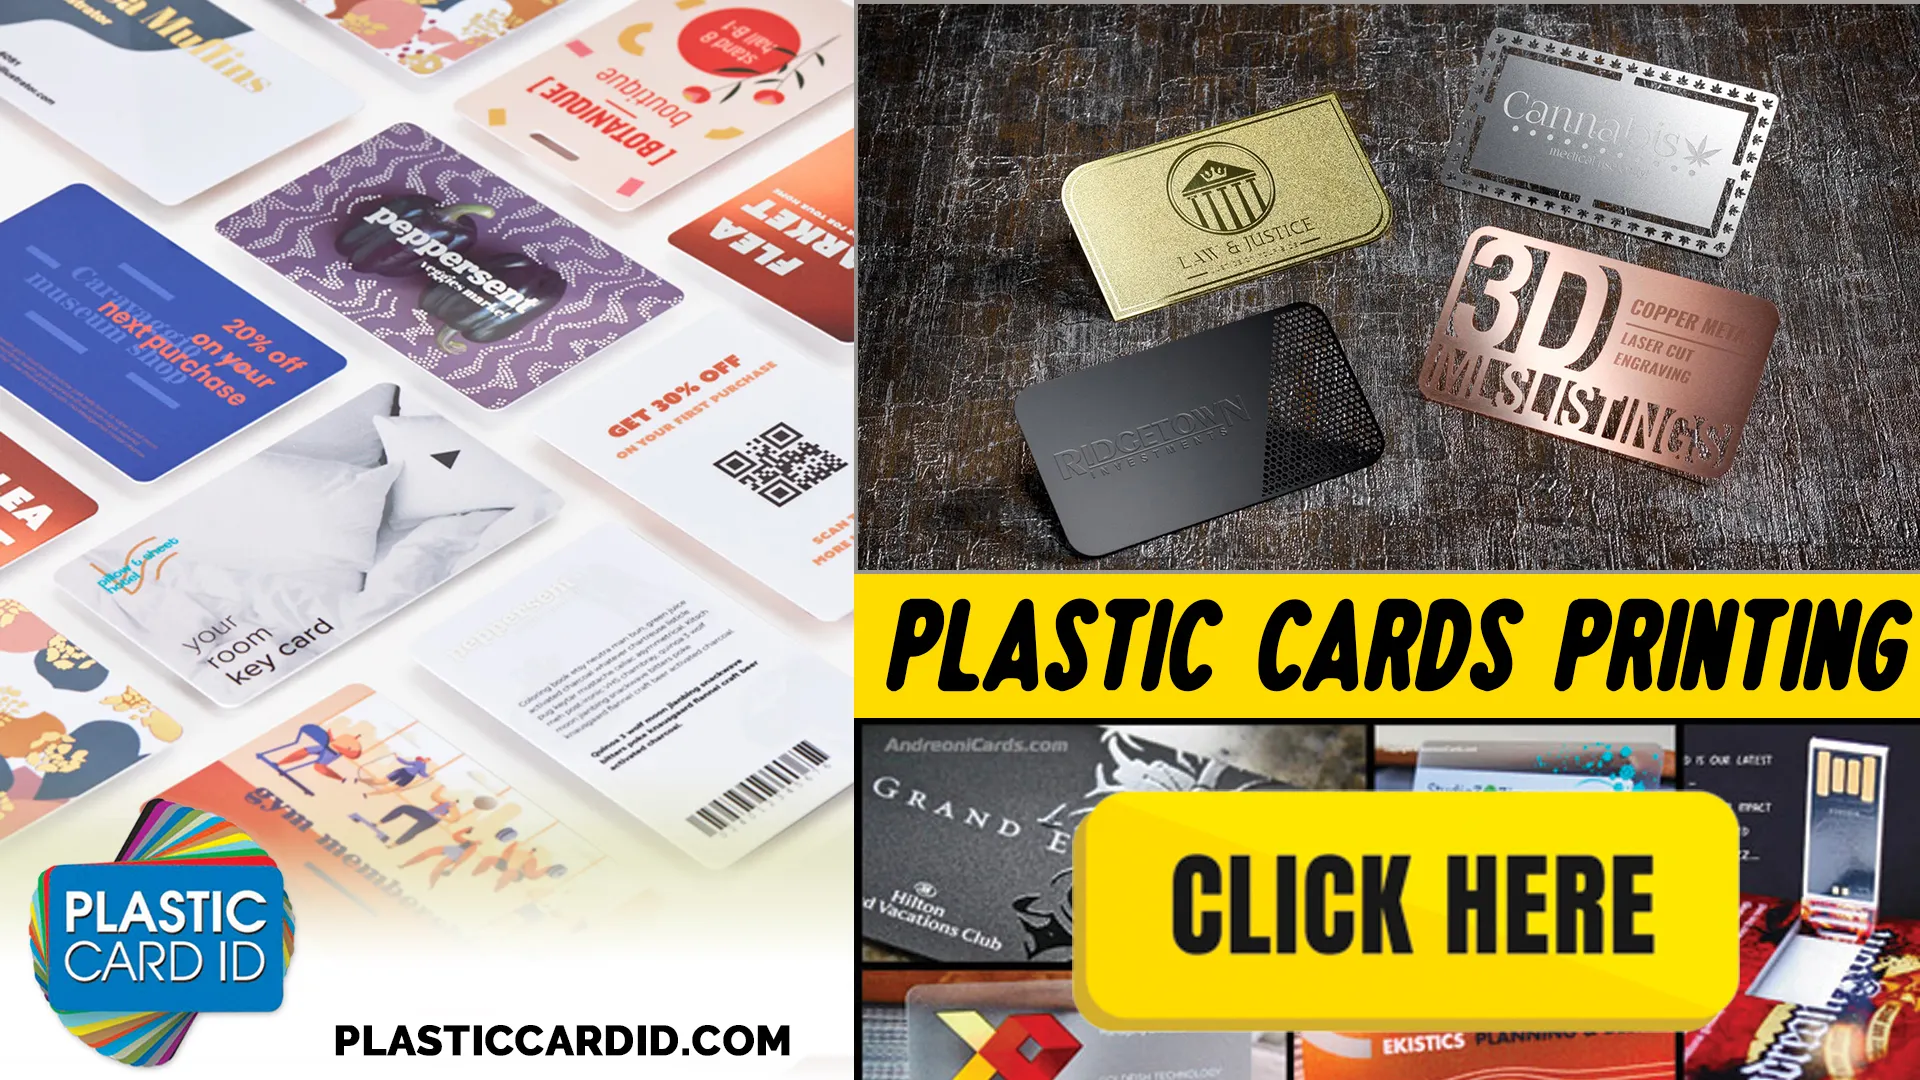 Modern Technology at Plastic Card ID
